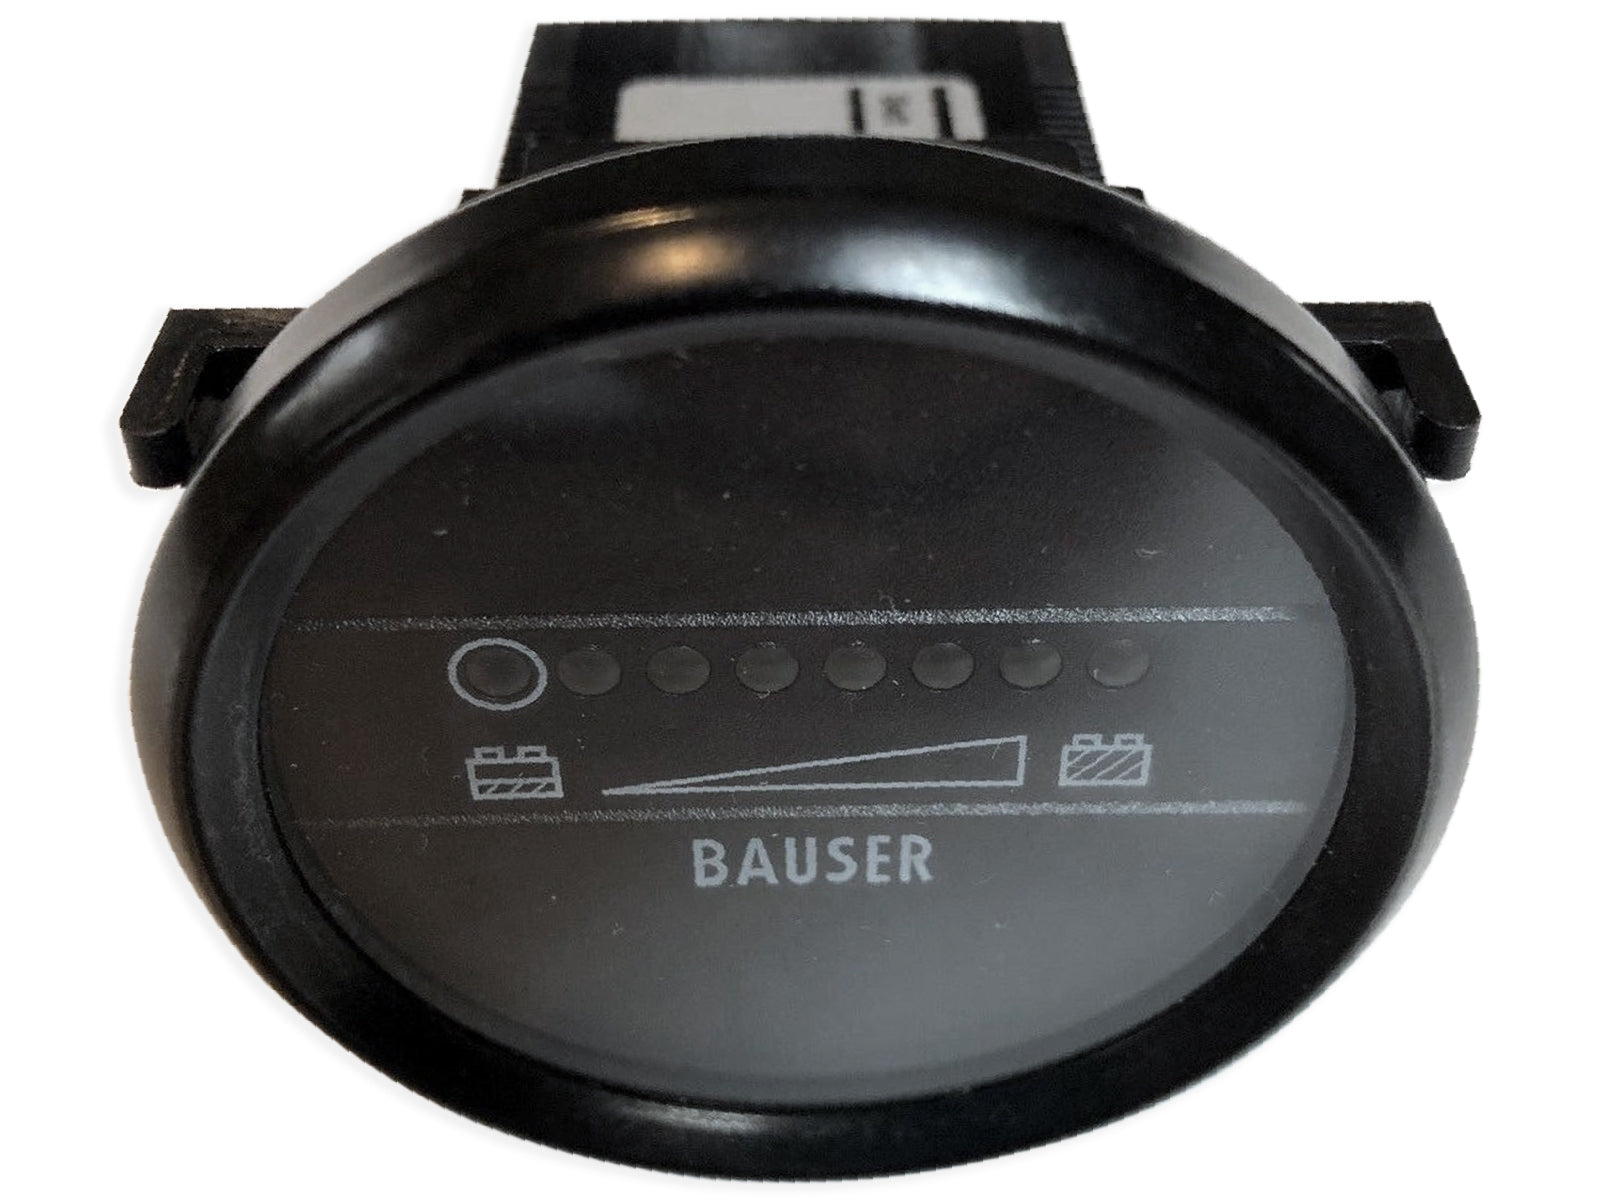 Bauser Accumeter - ppdistributors